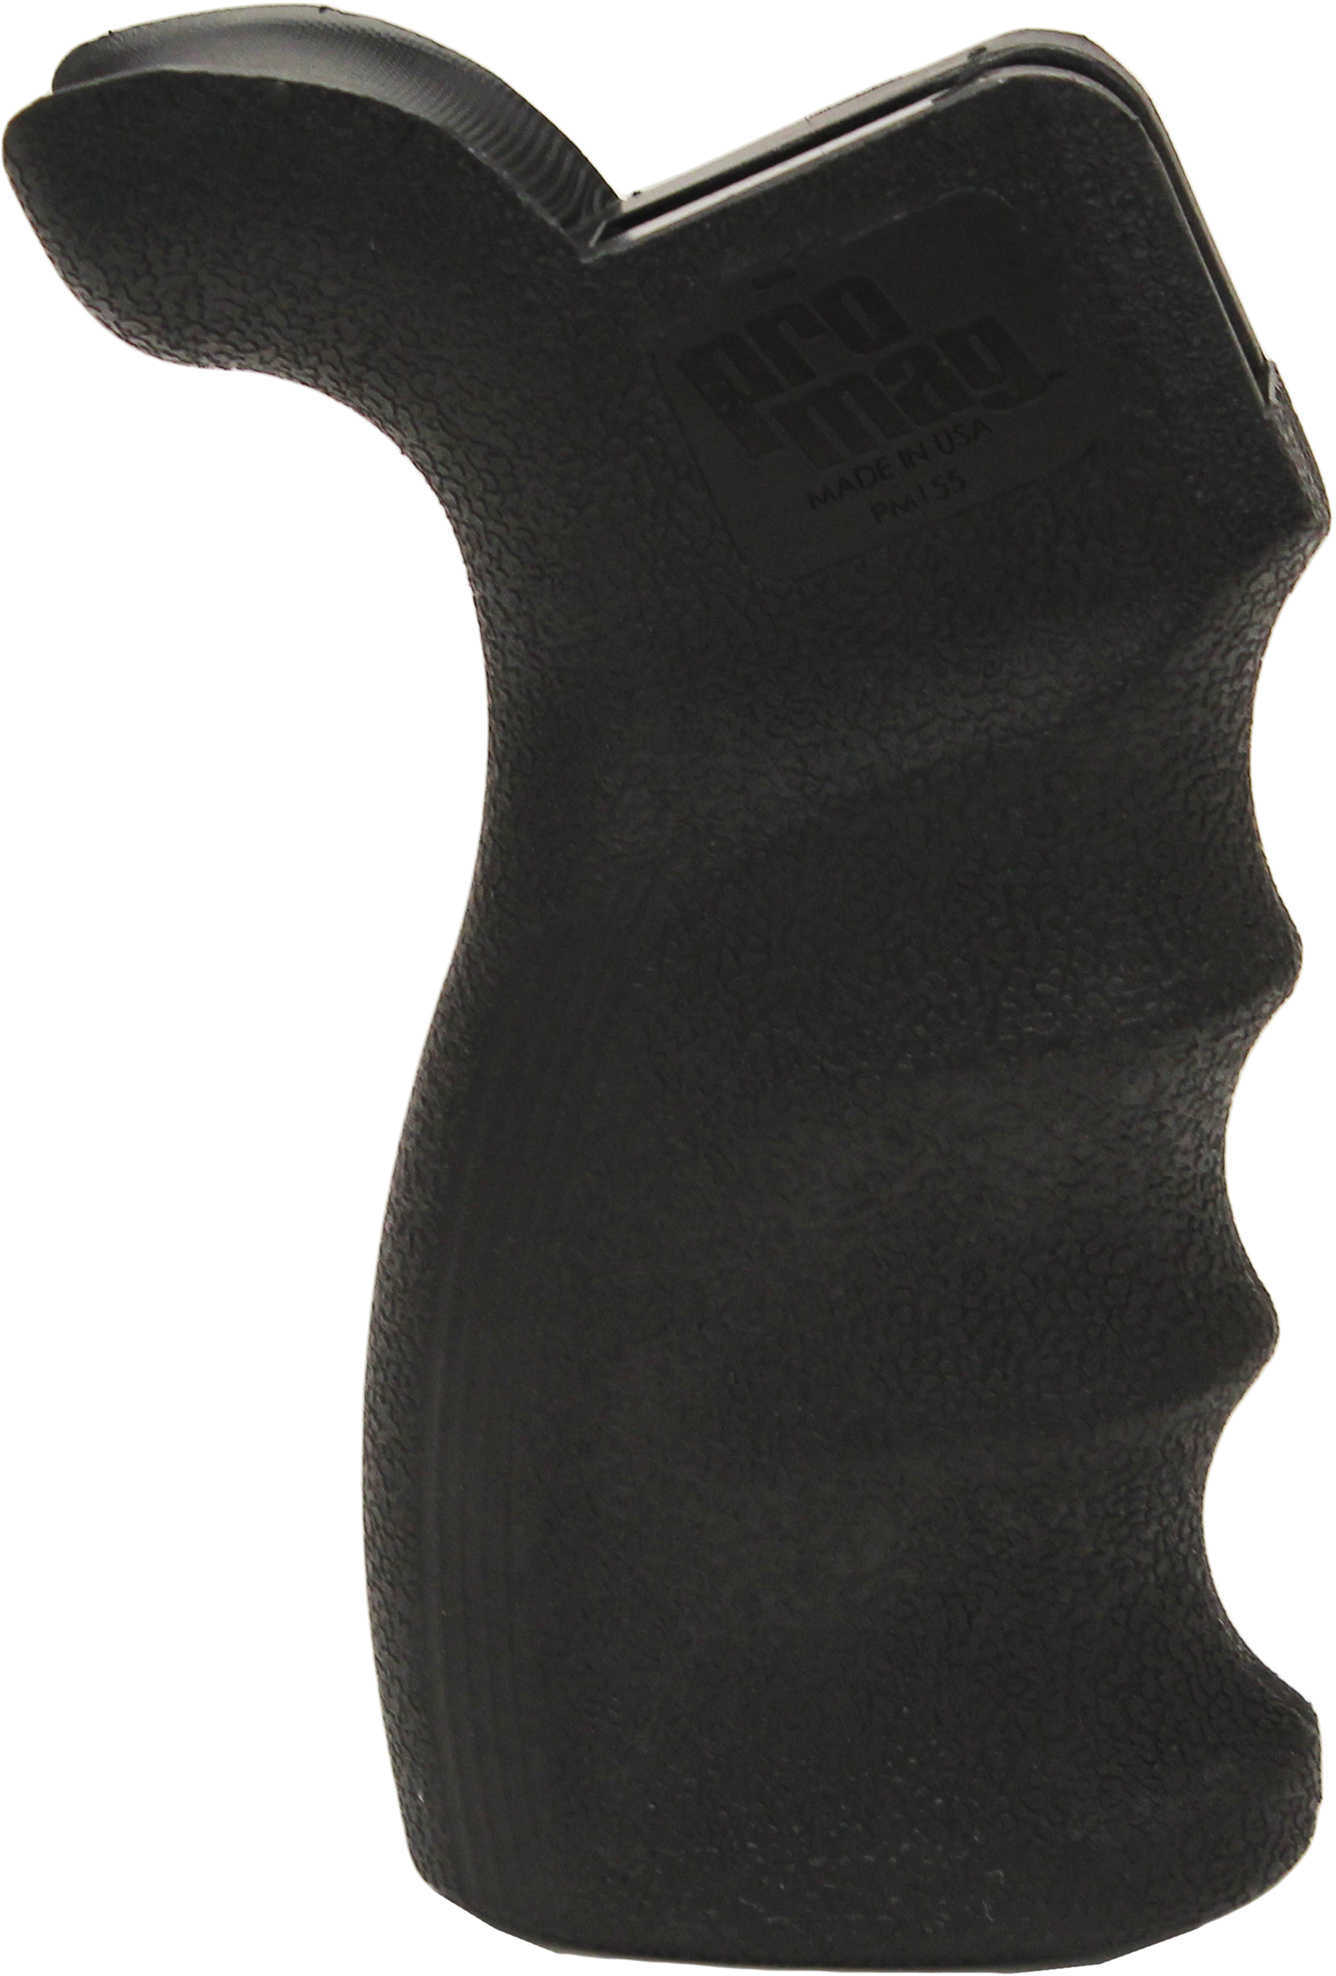 ProMag Grip Fits AR Rifles Black PM155